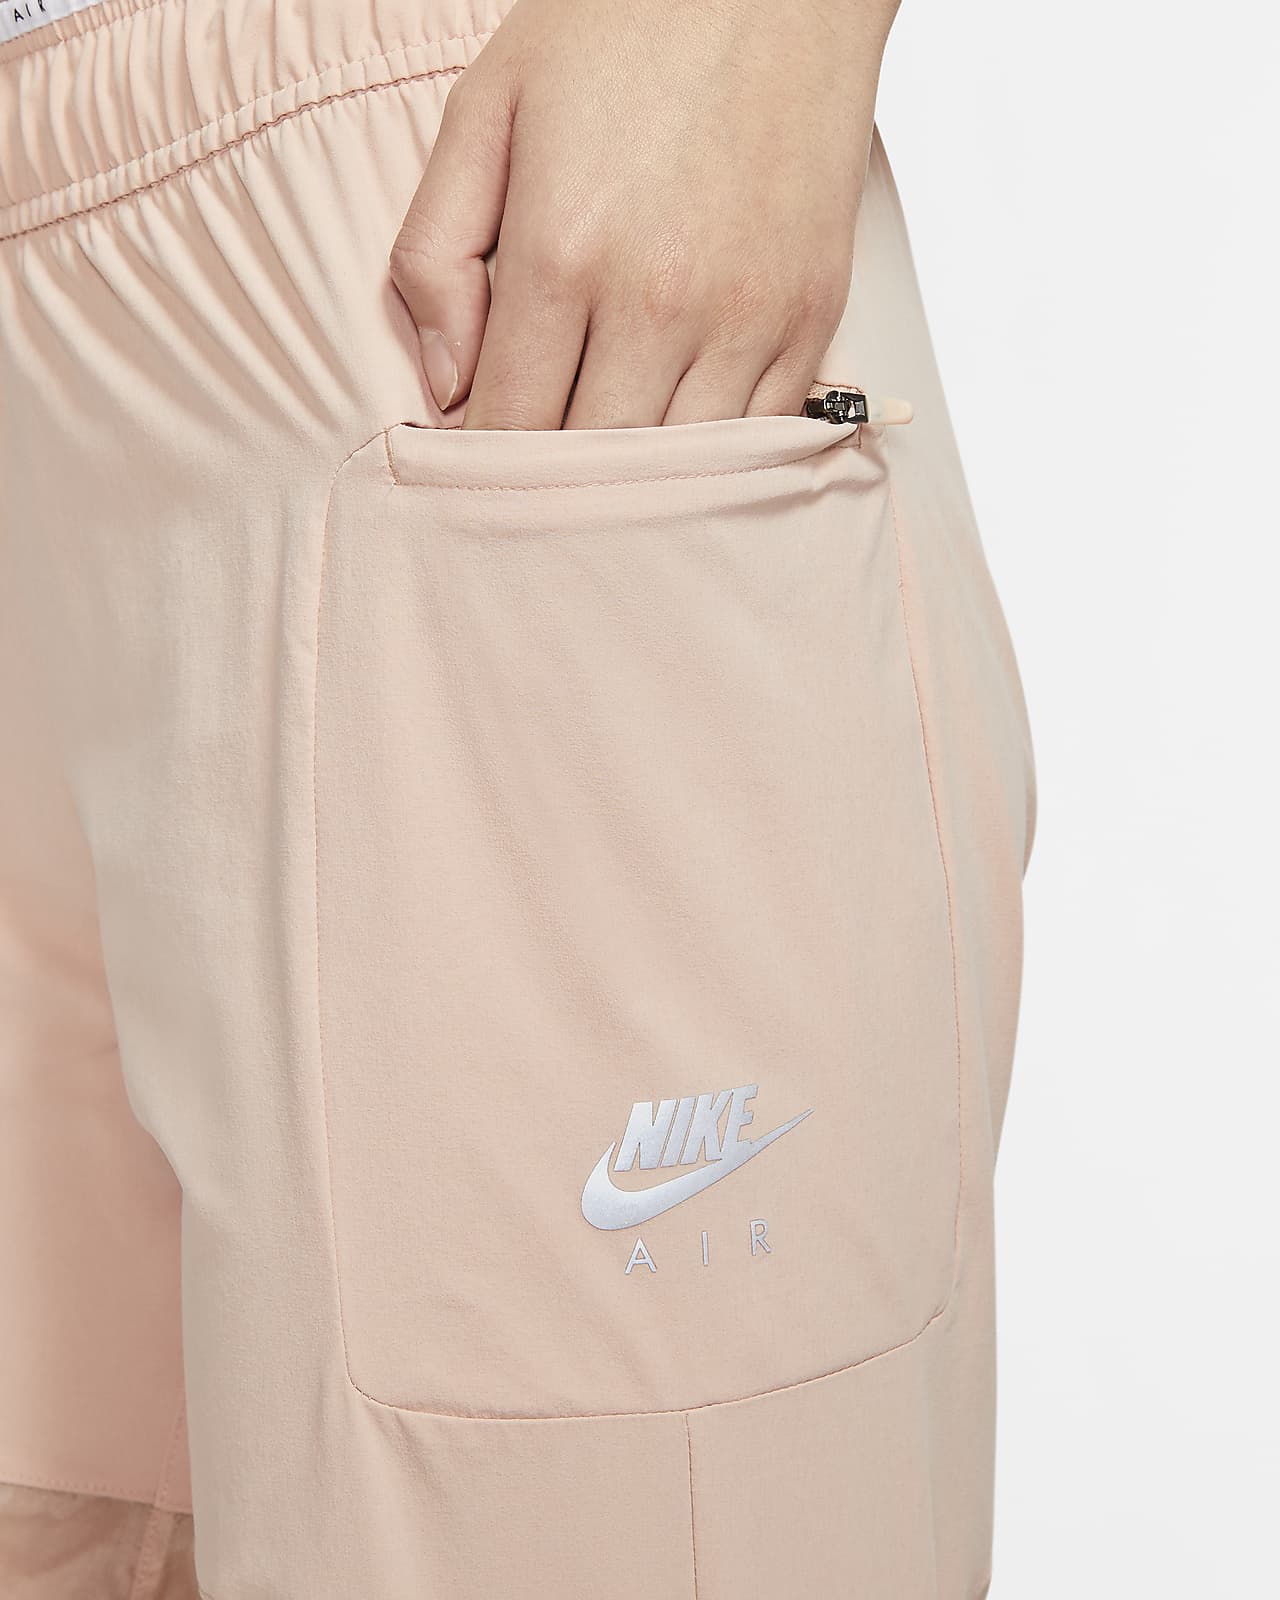 Nike Air Women's Running Trousers. Nike SG